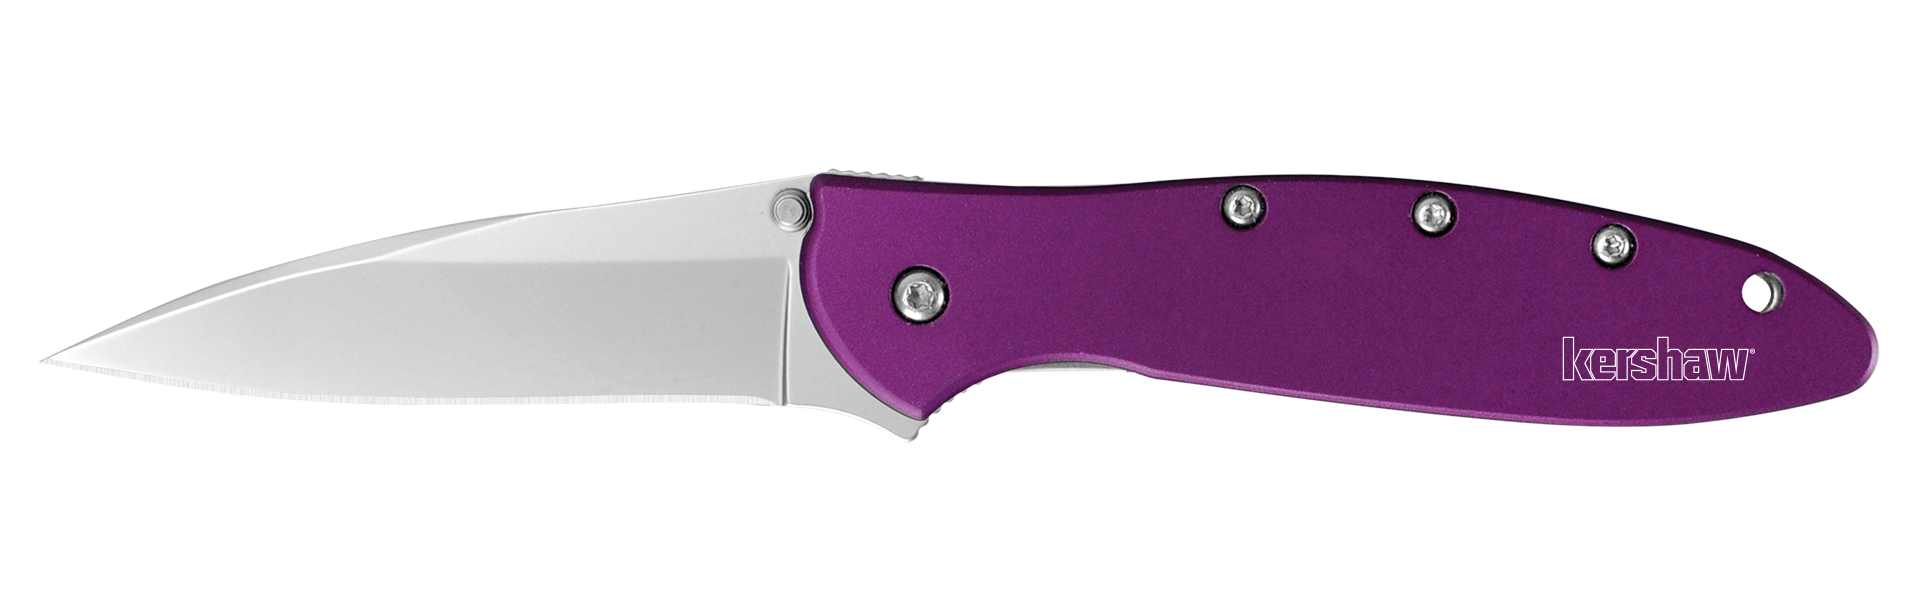 Kershaw Leek - Assisted Opening - Aluminum Handle - Purple - 1660PUR